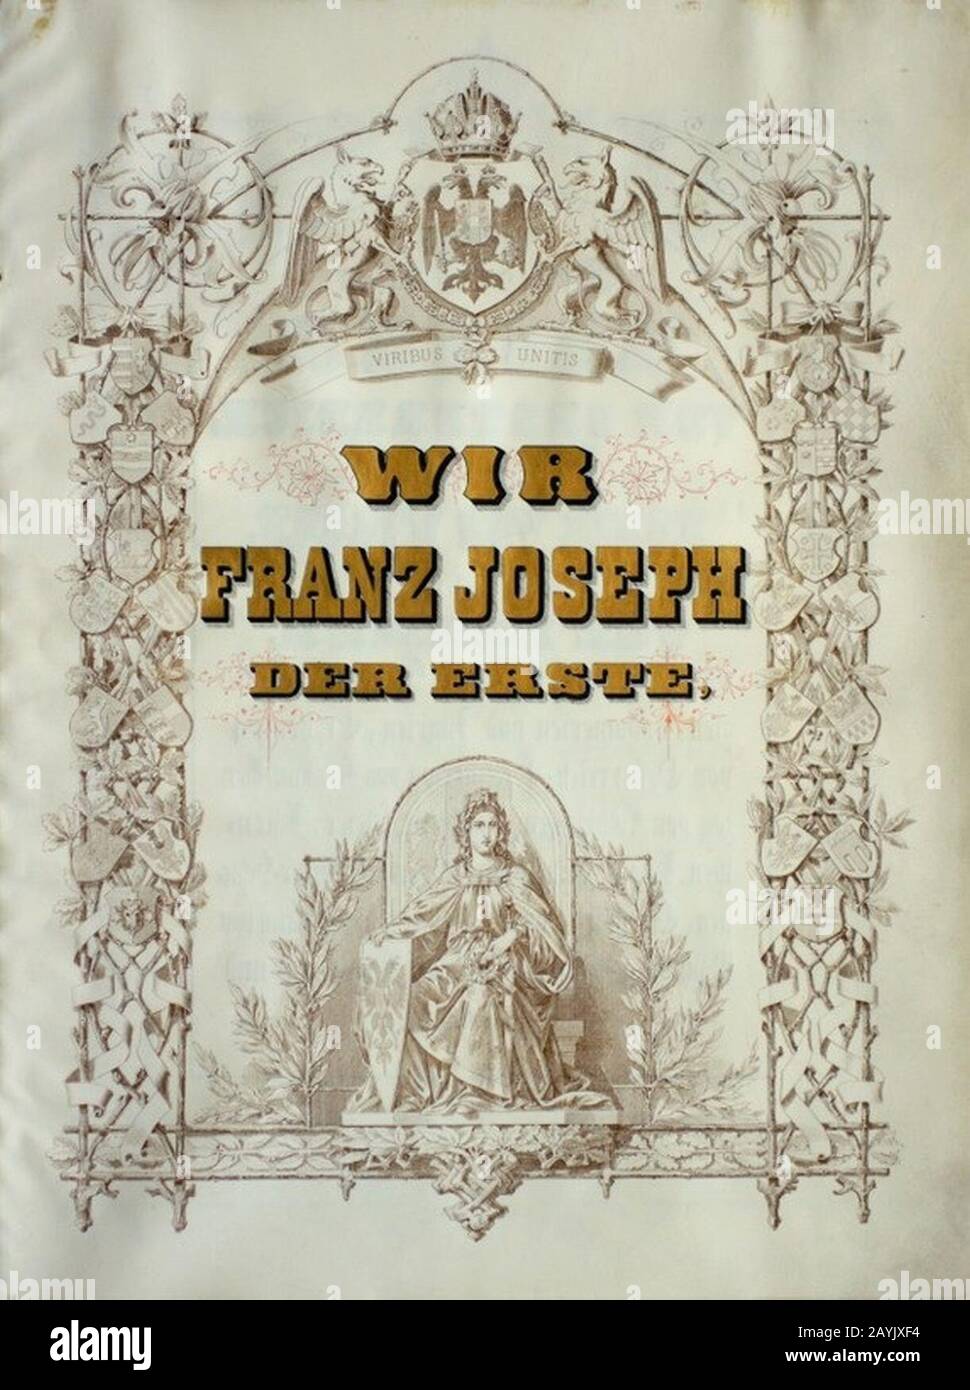 Freiherrenstandsdiplom - Albin von Vetsera 1870 - Seite 1. Stock Photo